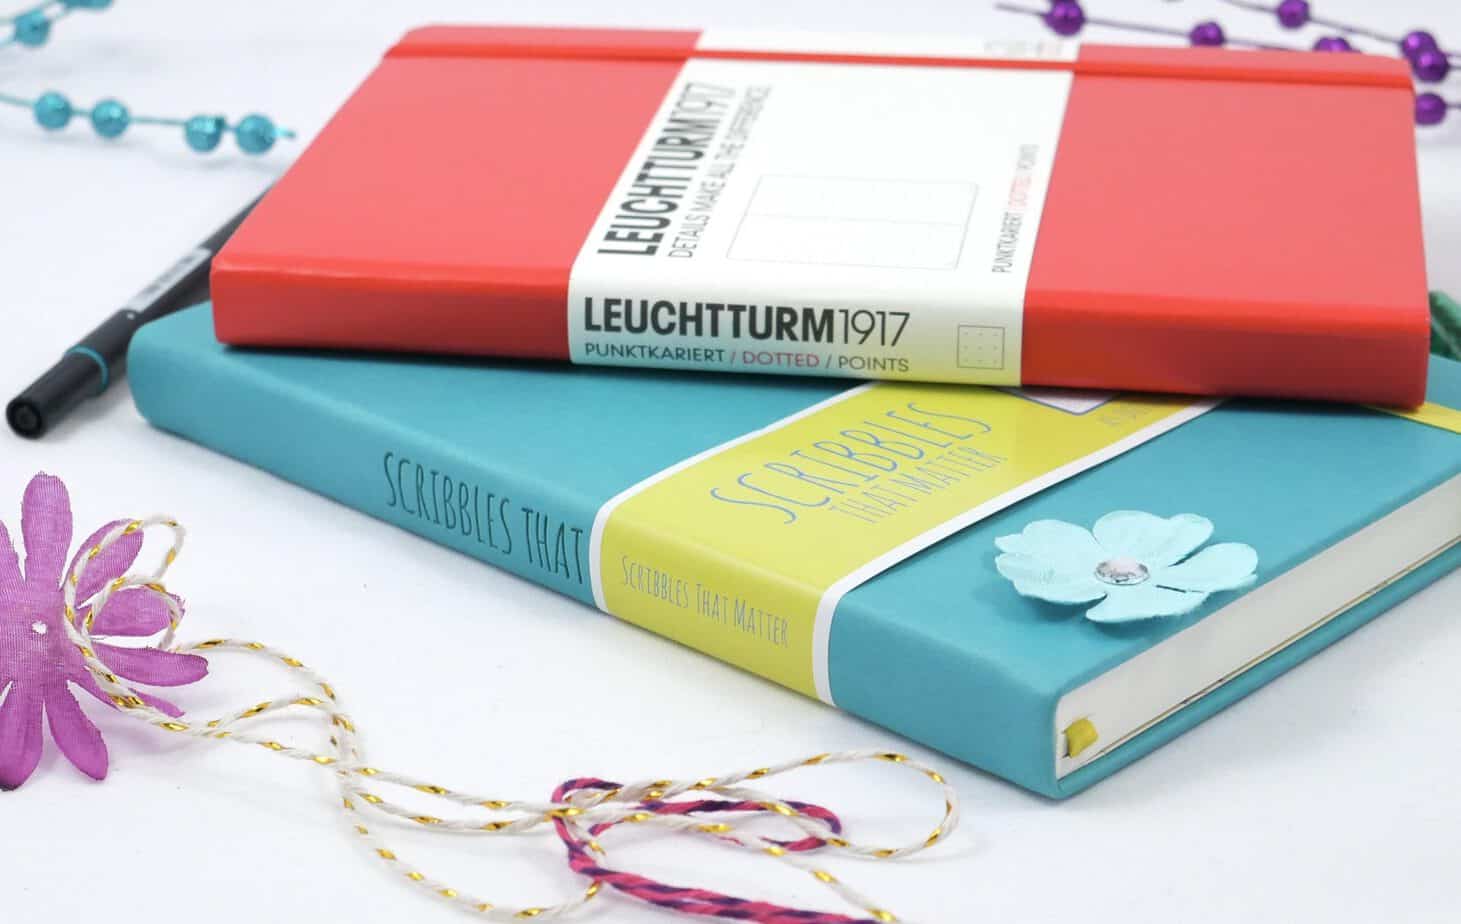 Scribbles That Matter Bullet Journal Notebook Review - Home is Handmade